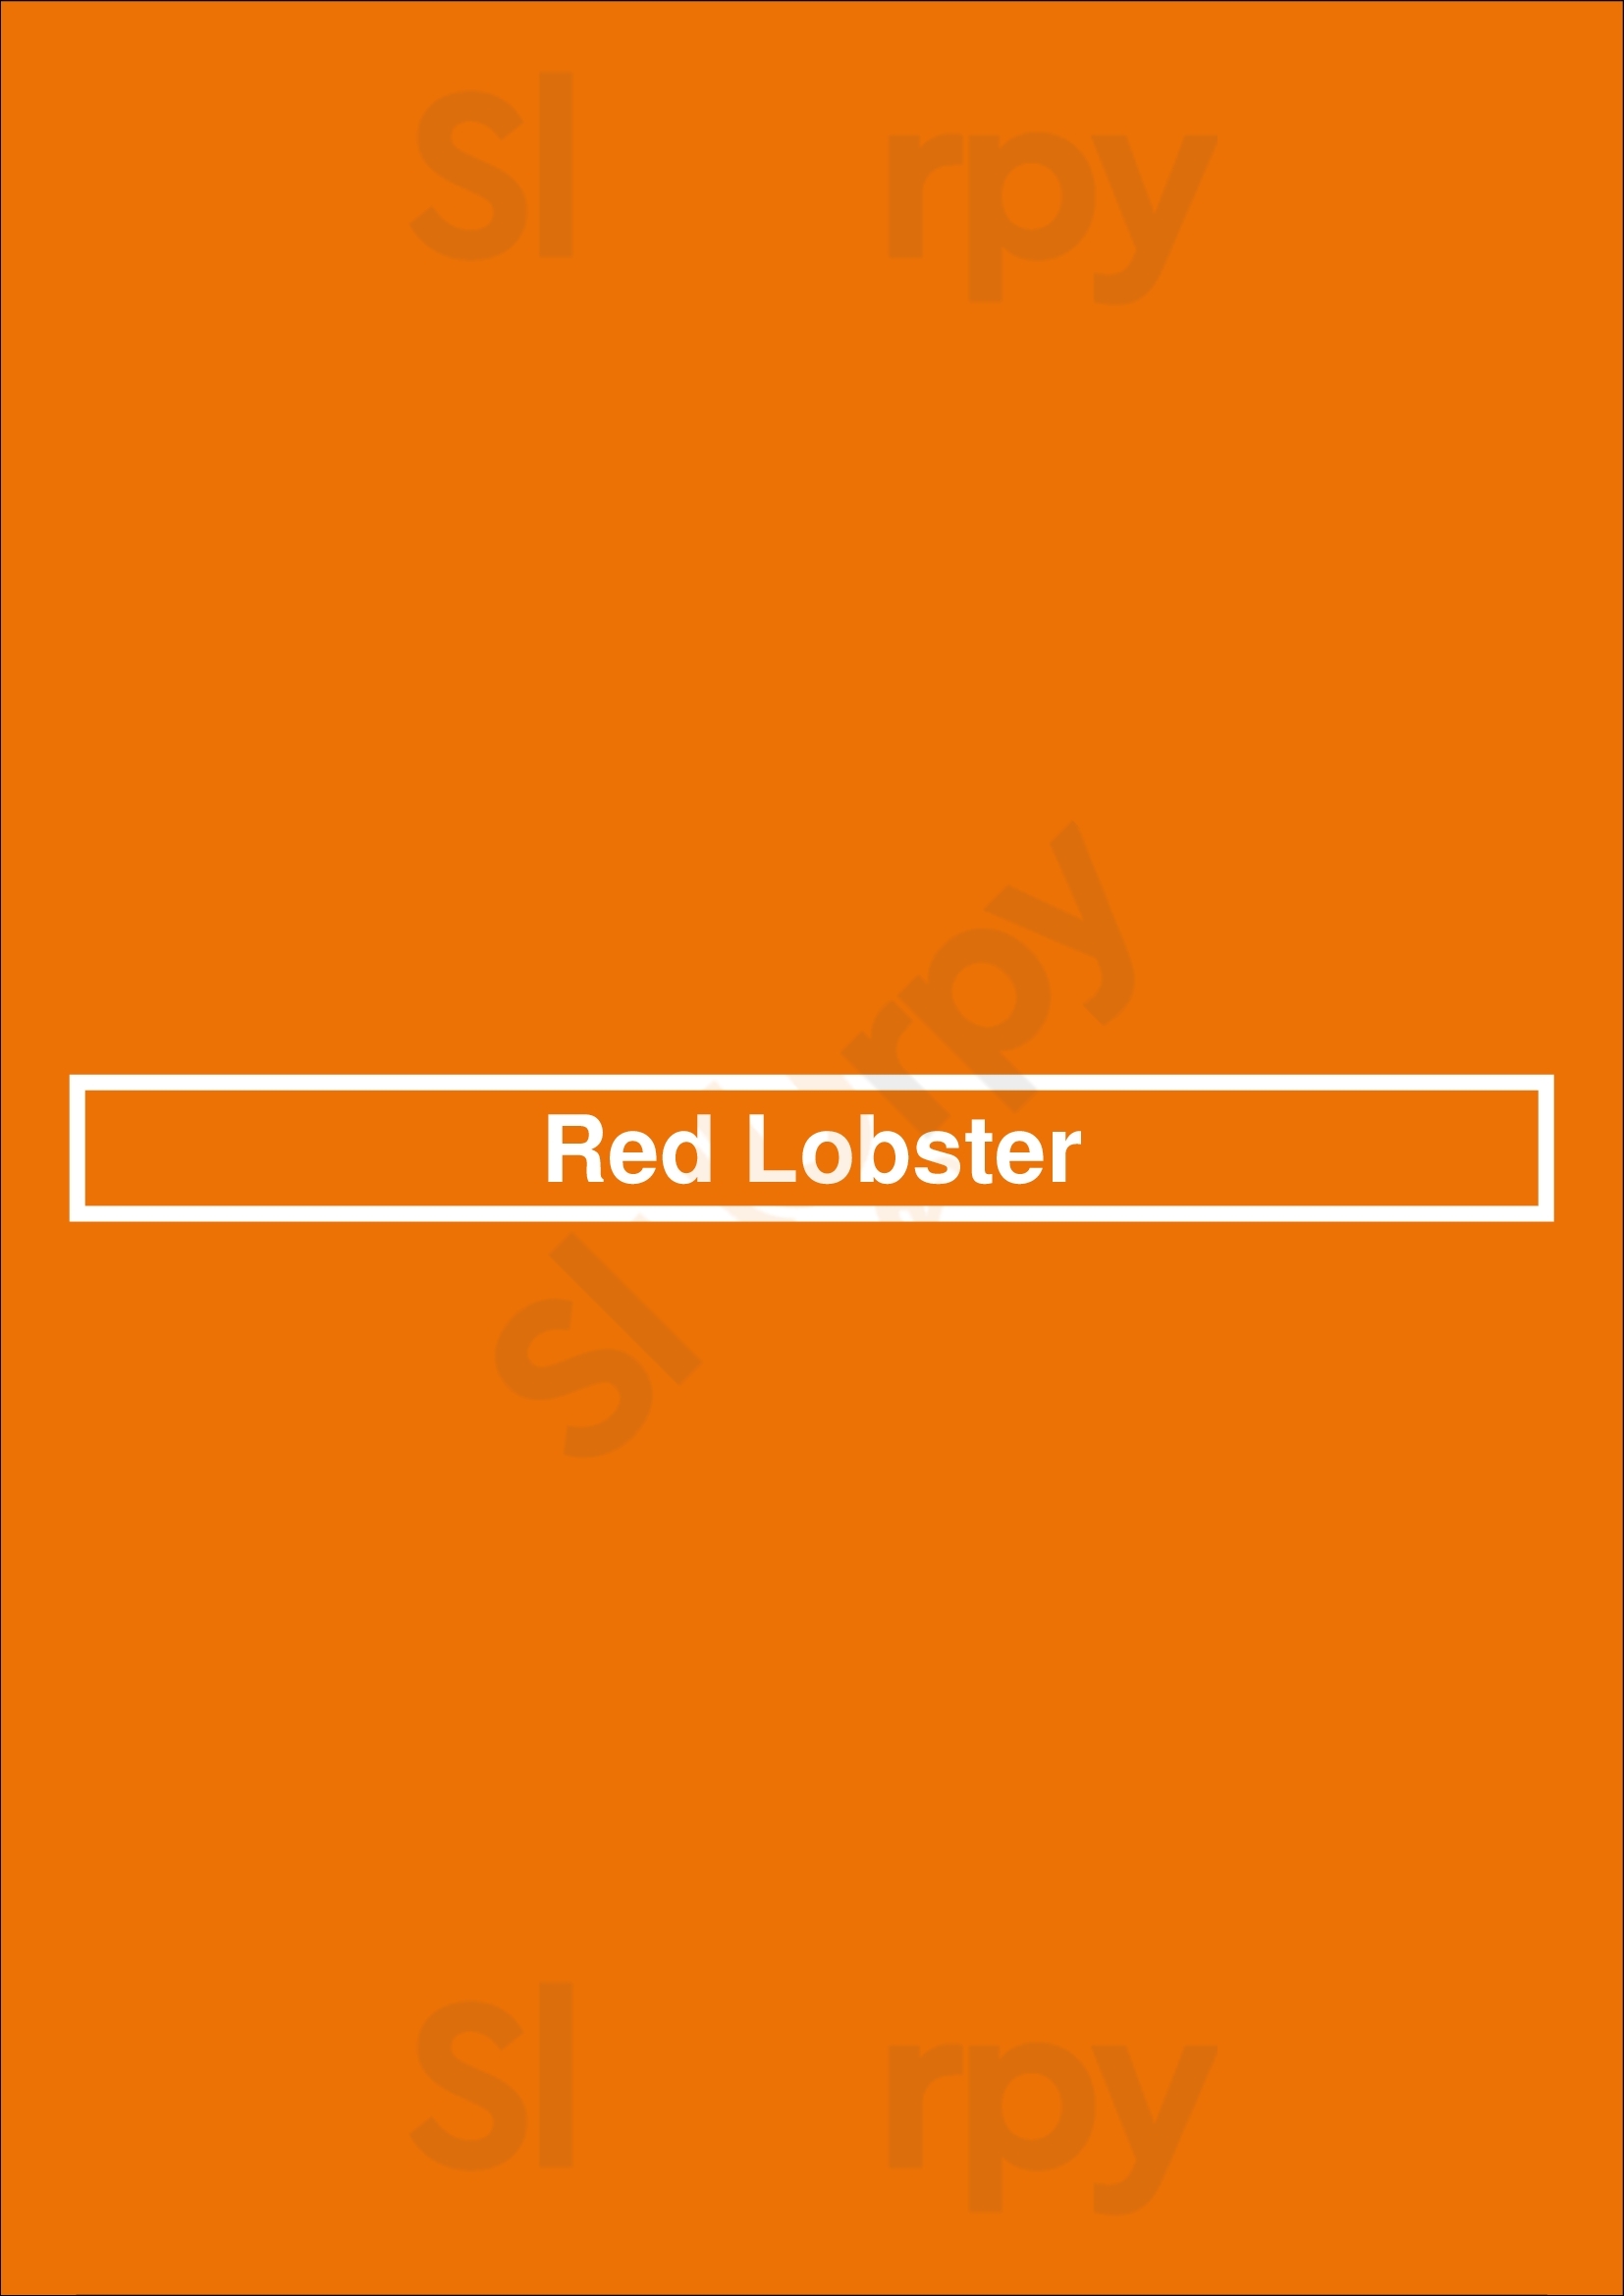 Red Lobster Columbus Menu - 1